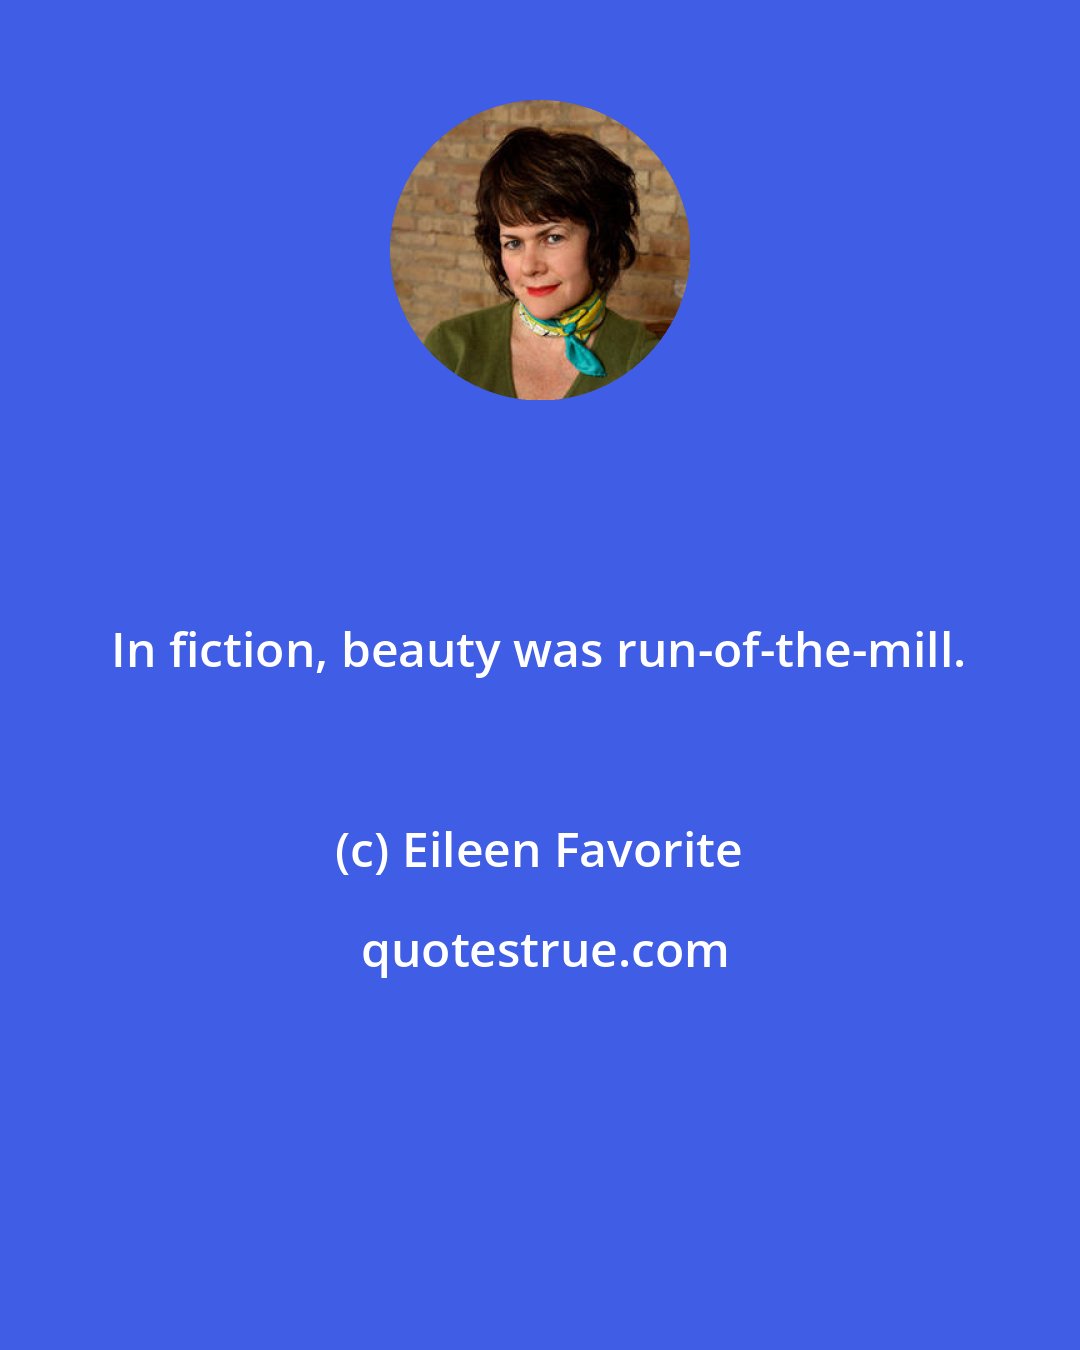 Eileen Favorite: In fiction, beauty was run-of-the-mill.